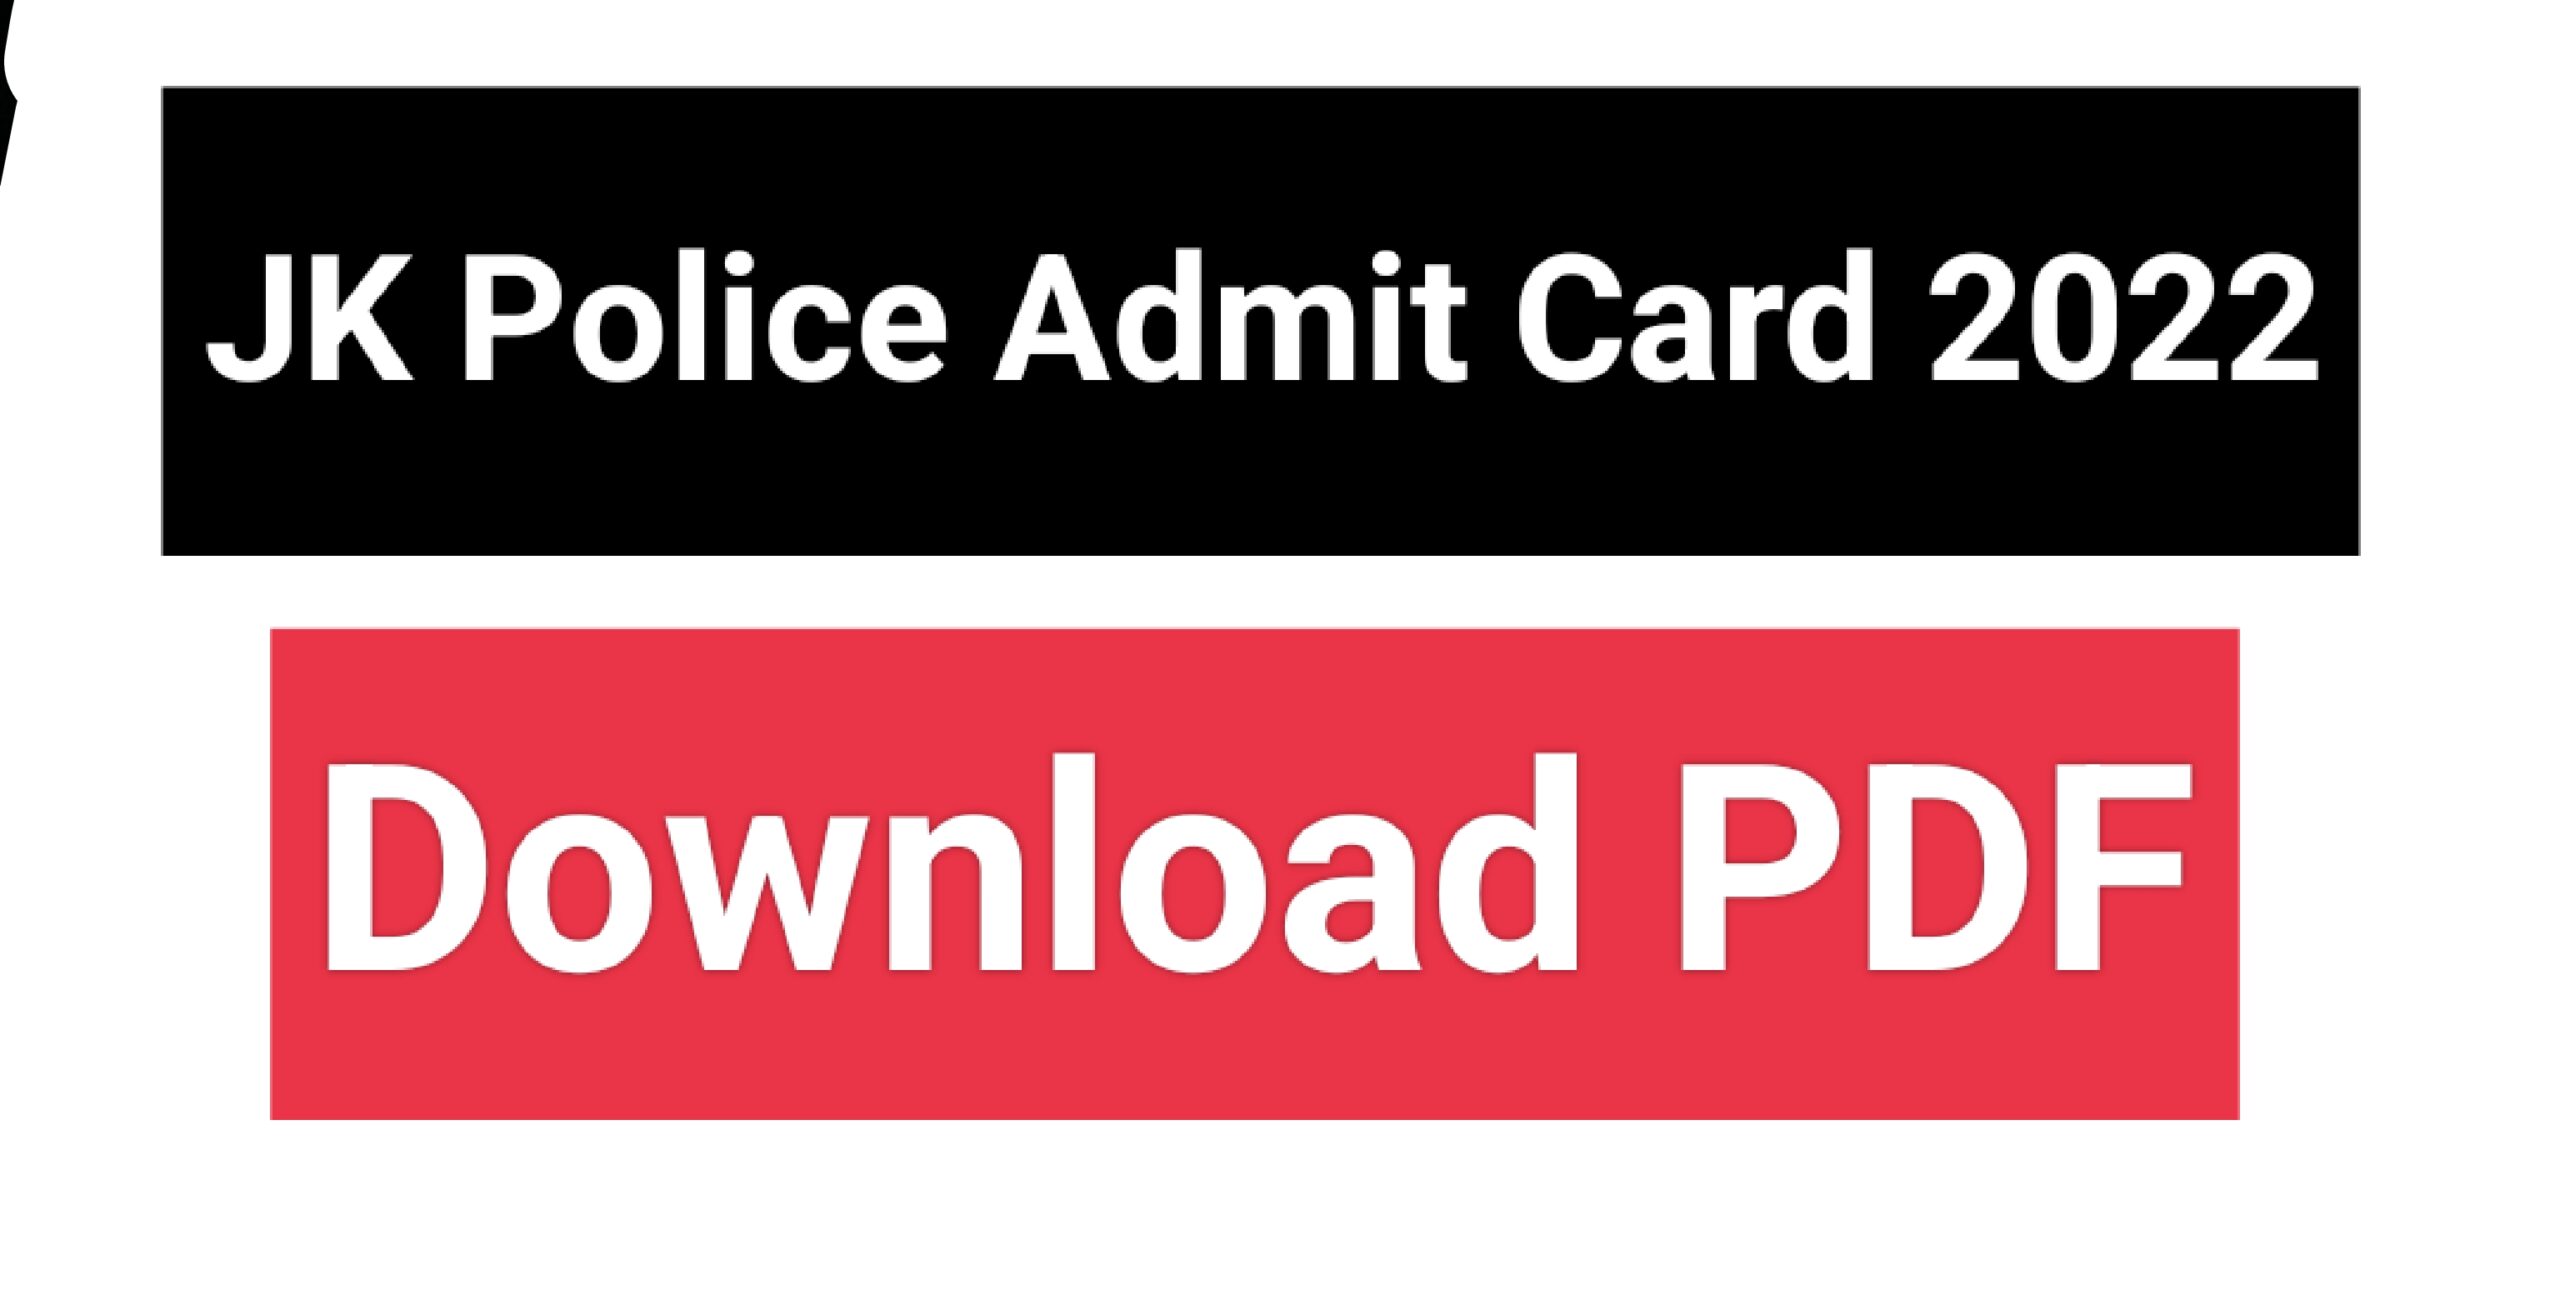 JKPolice Admit card 2022